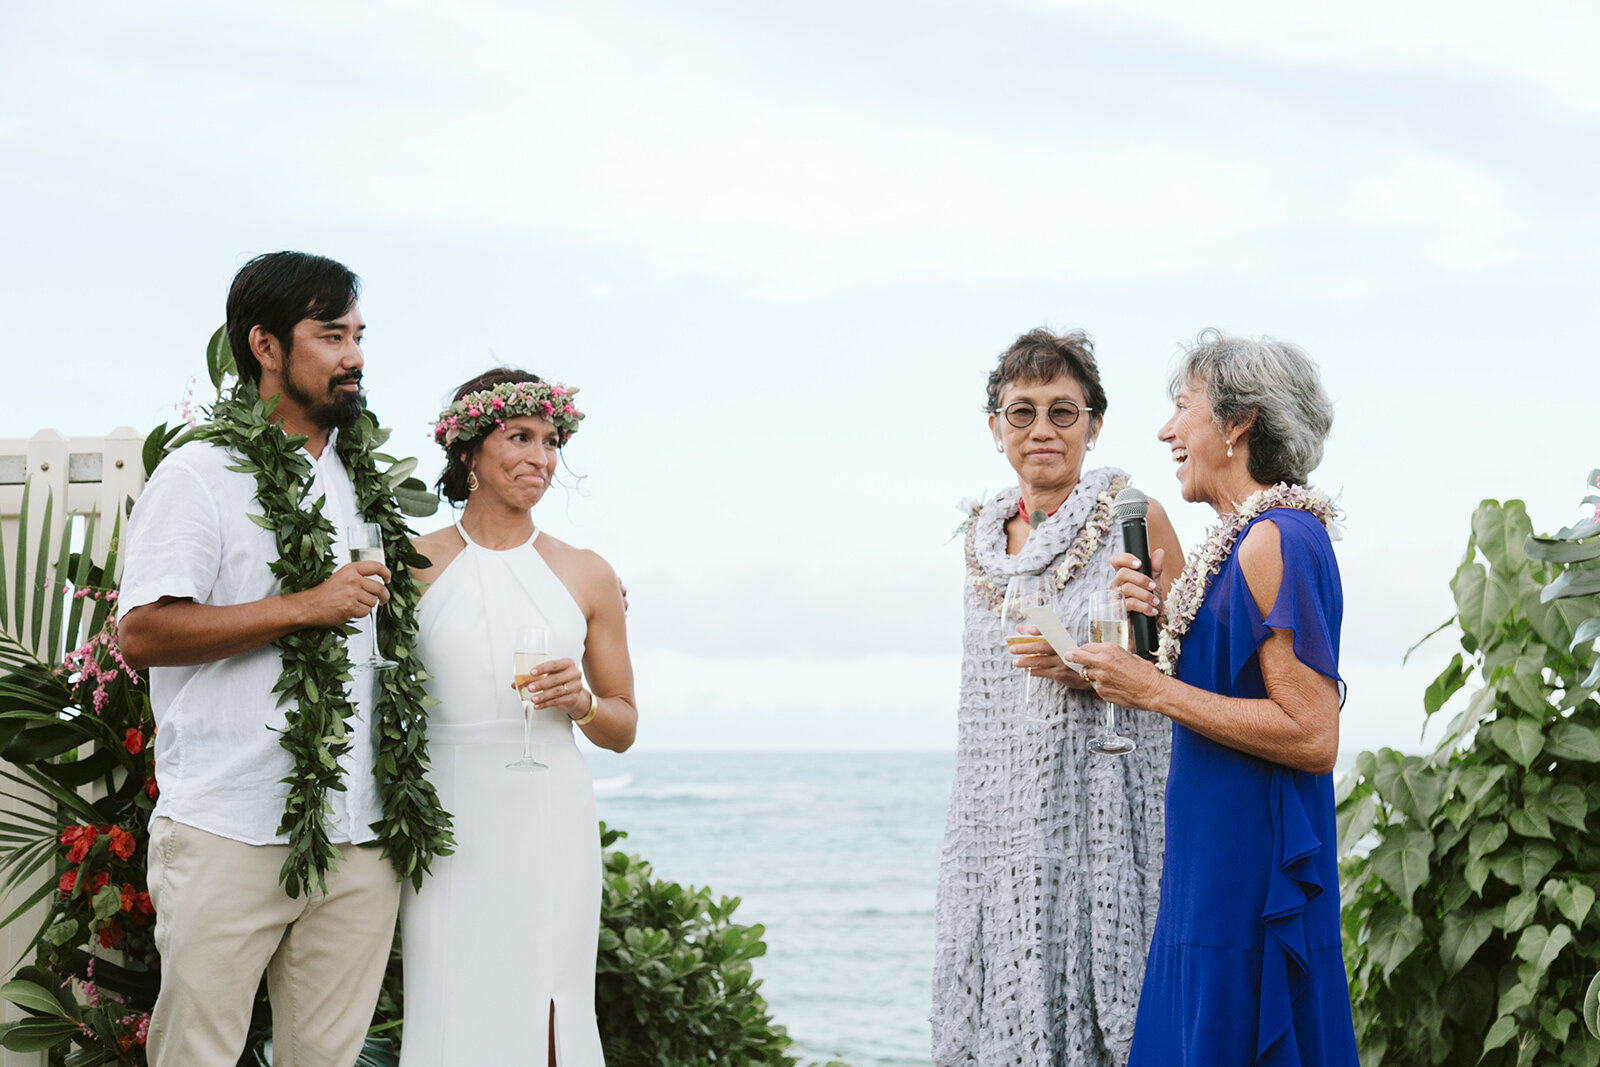 Mokuleia-North-Shore-Hawaii-Beach-House-Wedding-ceremony-champagne-toast